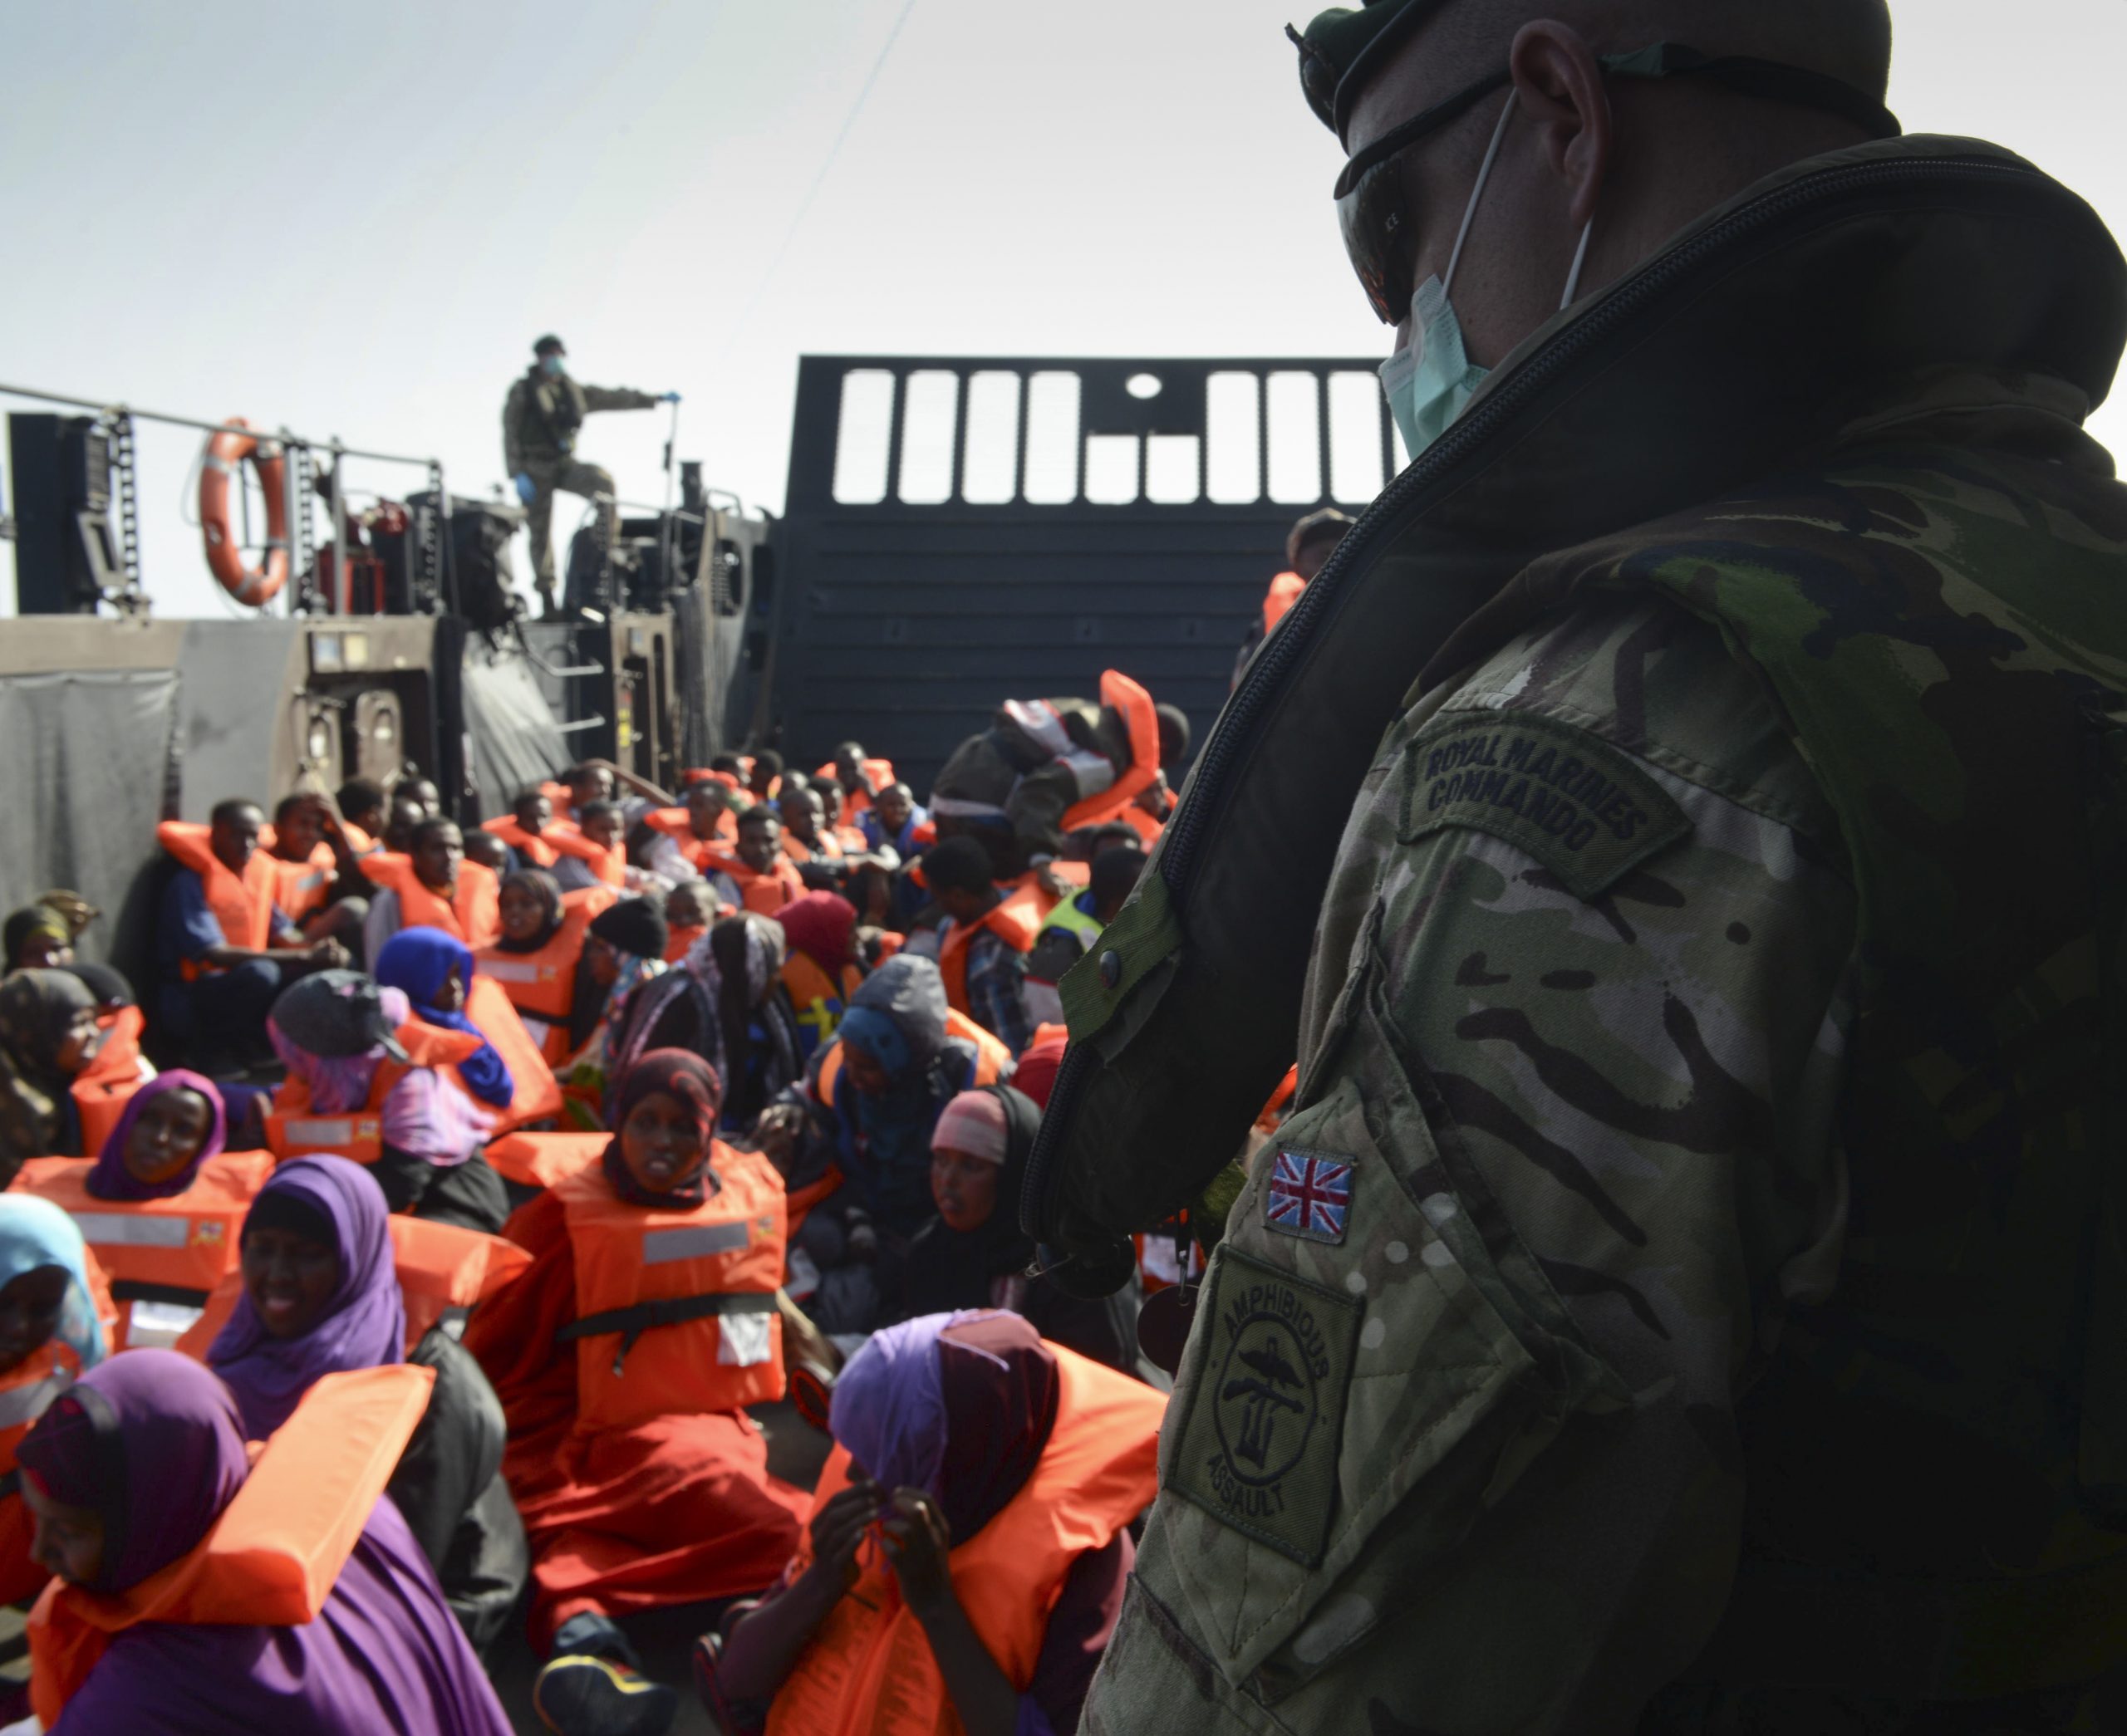 La Marina britannica salva i migranti nel Mediterraneo (LaPresse)